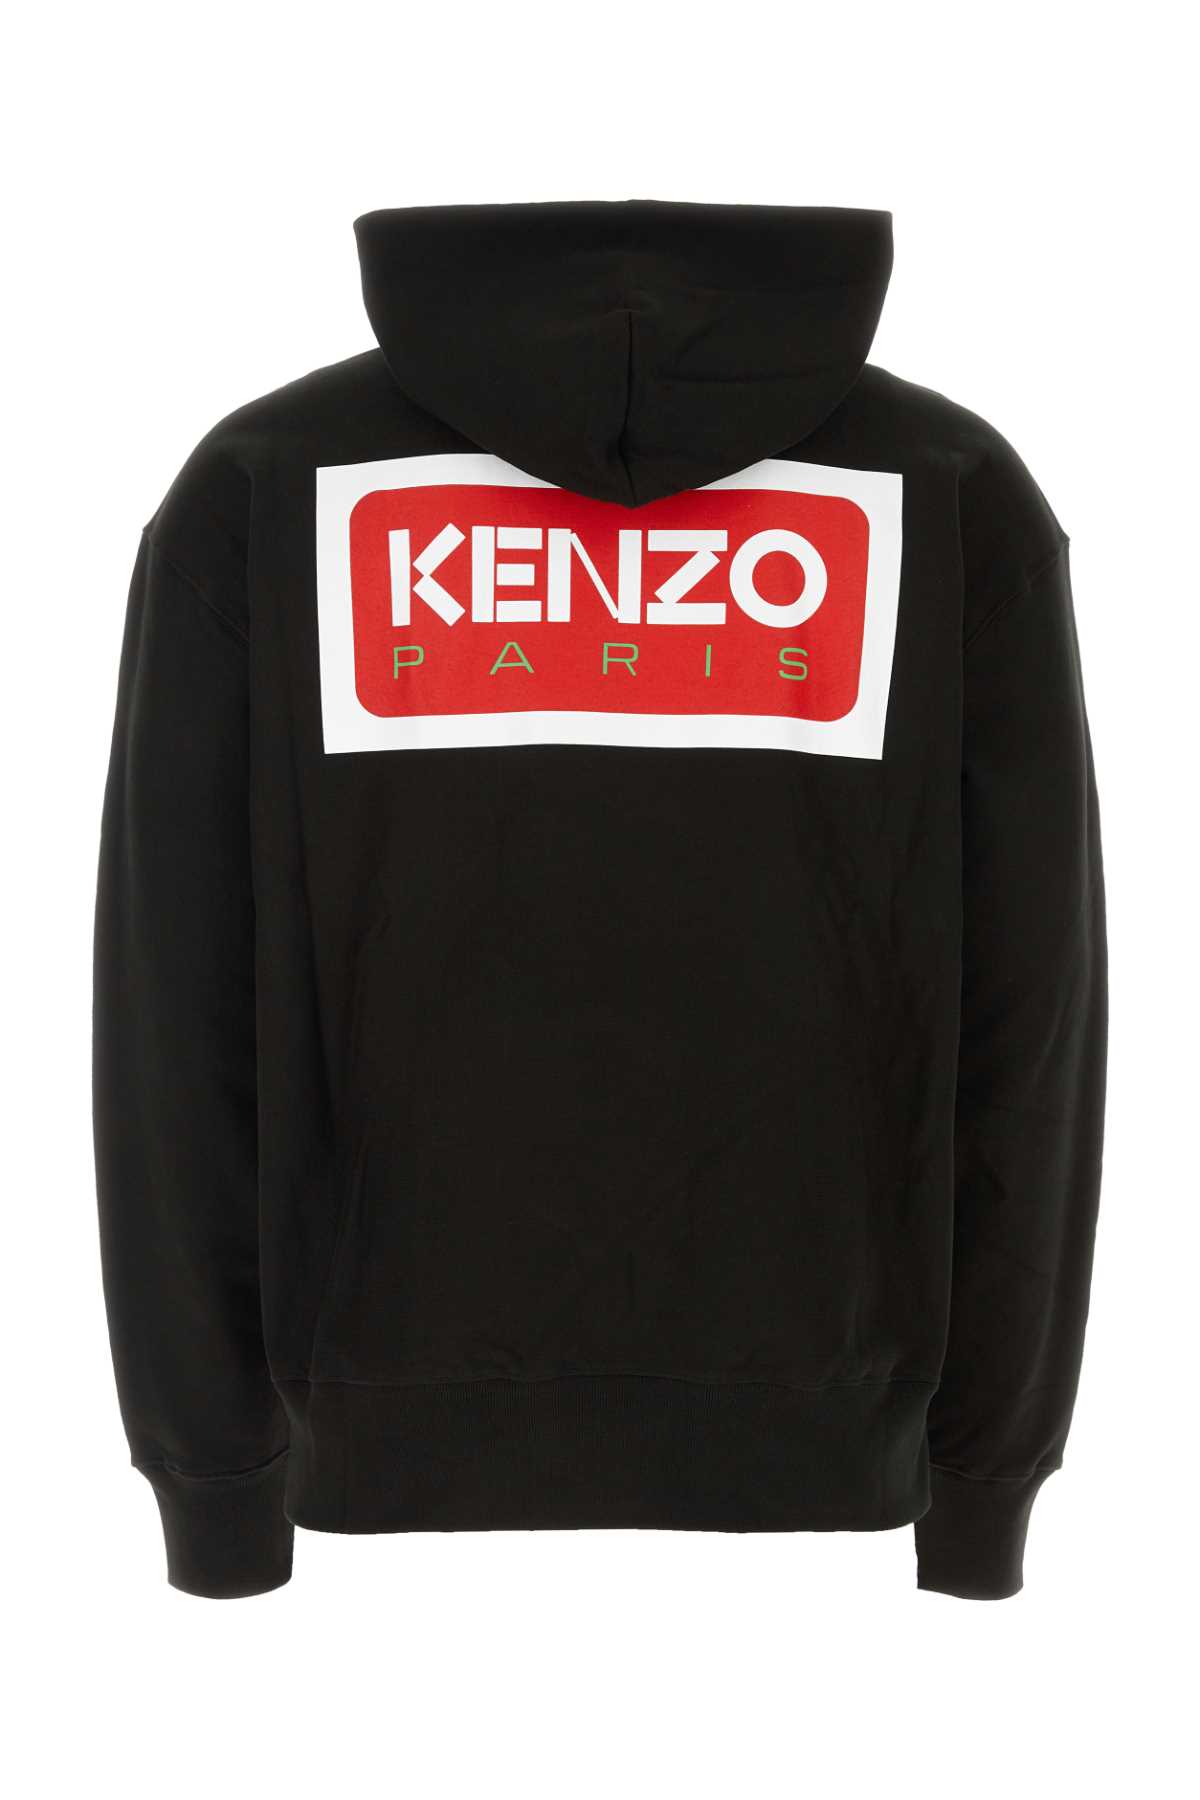 Kenzo Black Stretch Cotton Oversize Sweatshirt